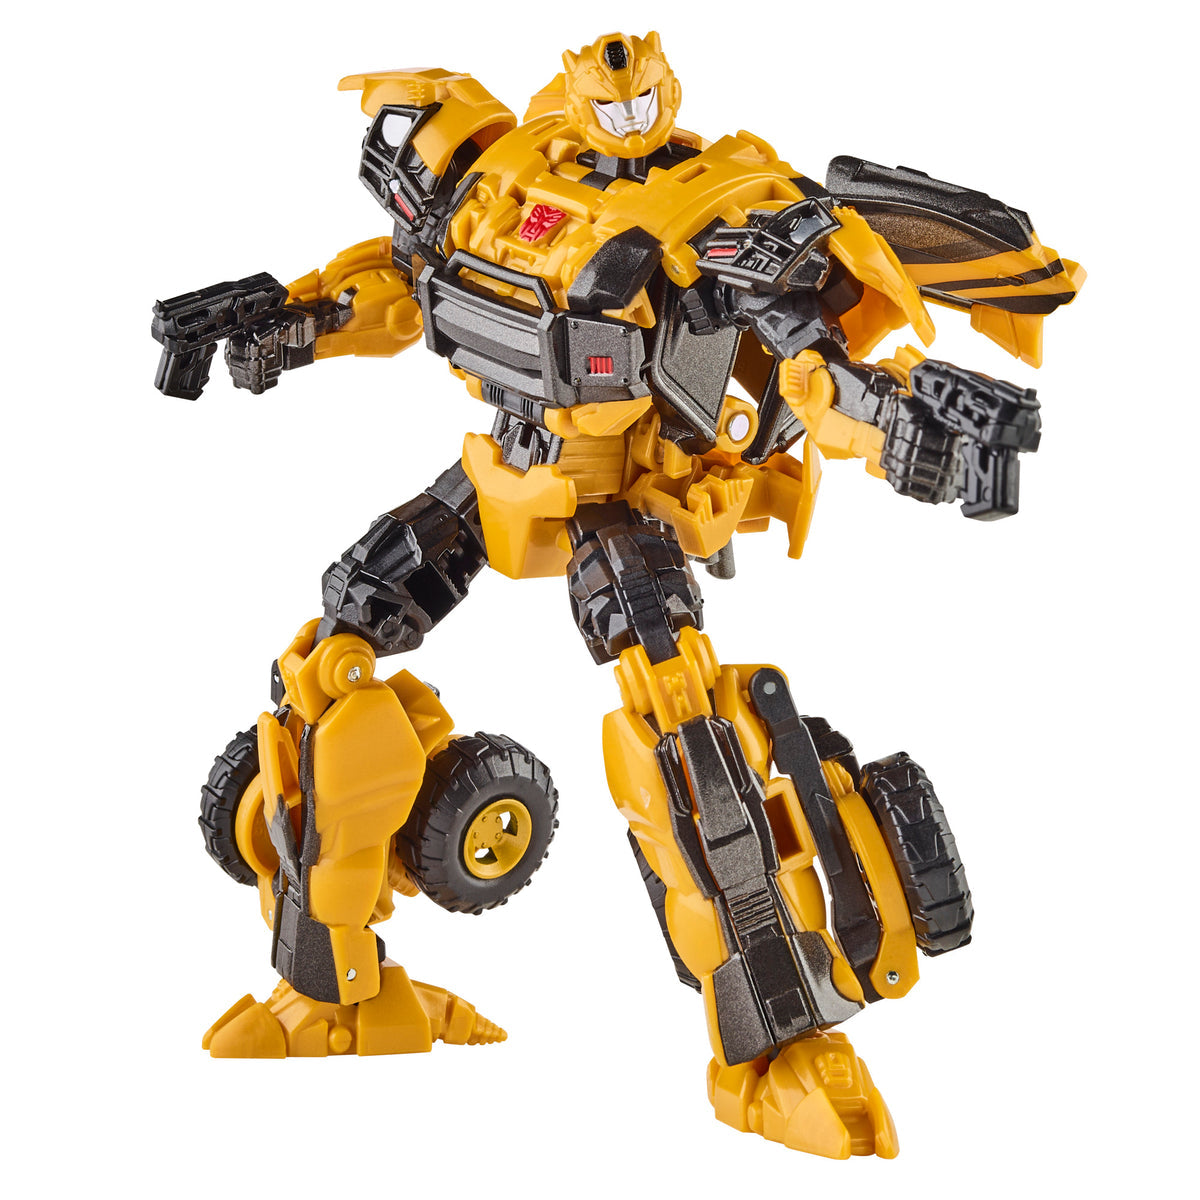 Hasbro - Transformers: Reactivate - Bumblebee &amp; Starscream - Marvelous Toys